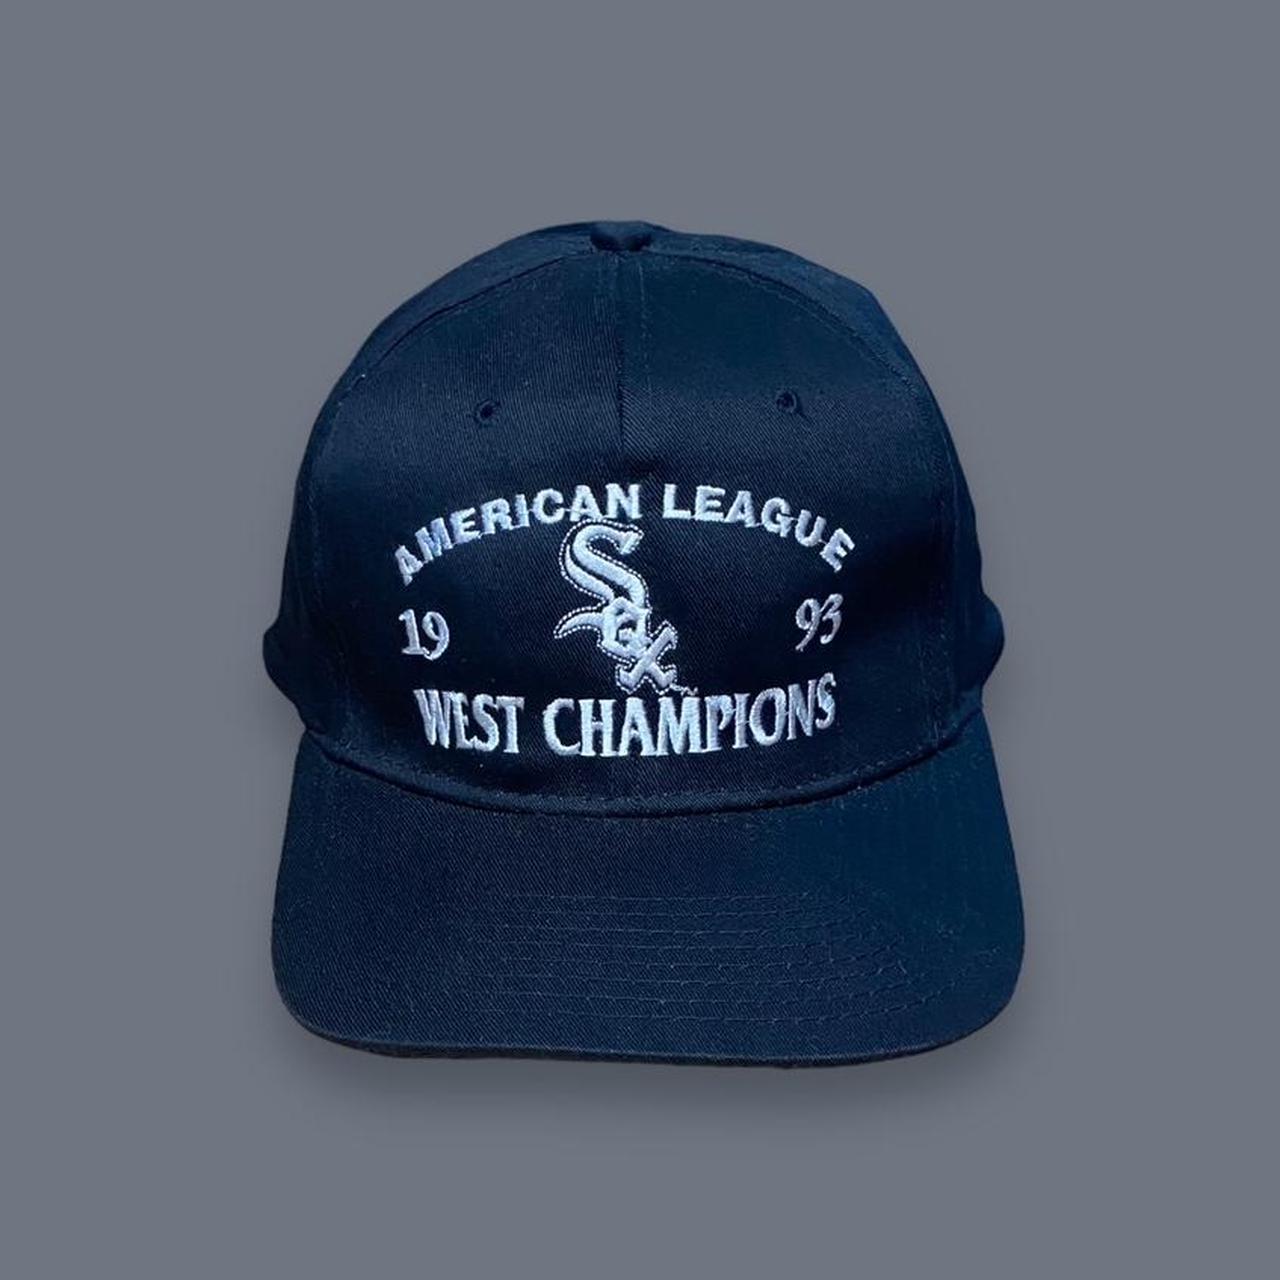 american league champions hat